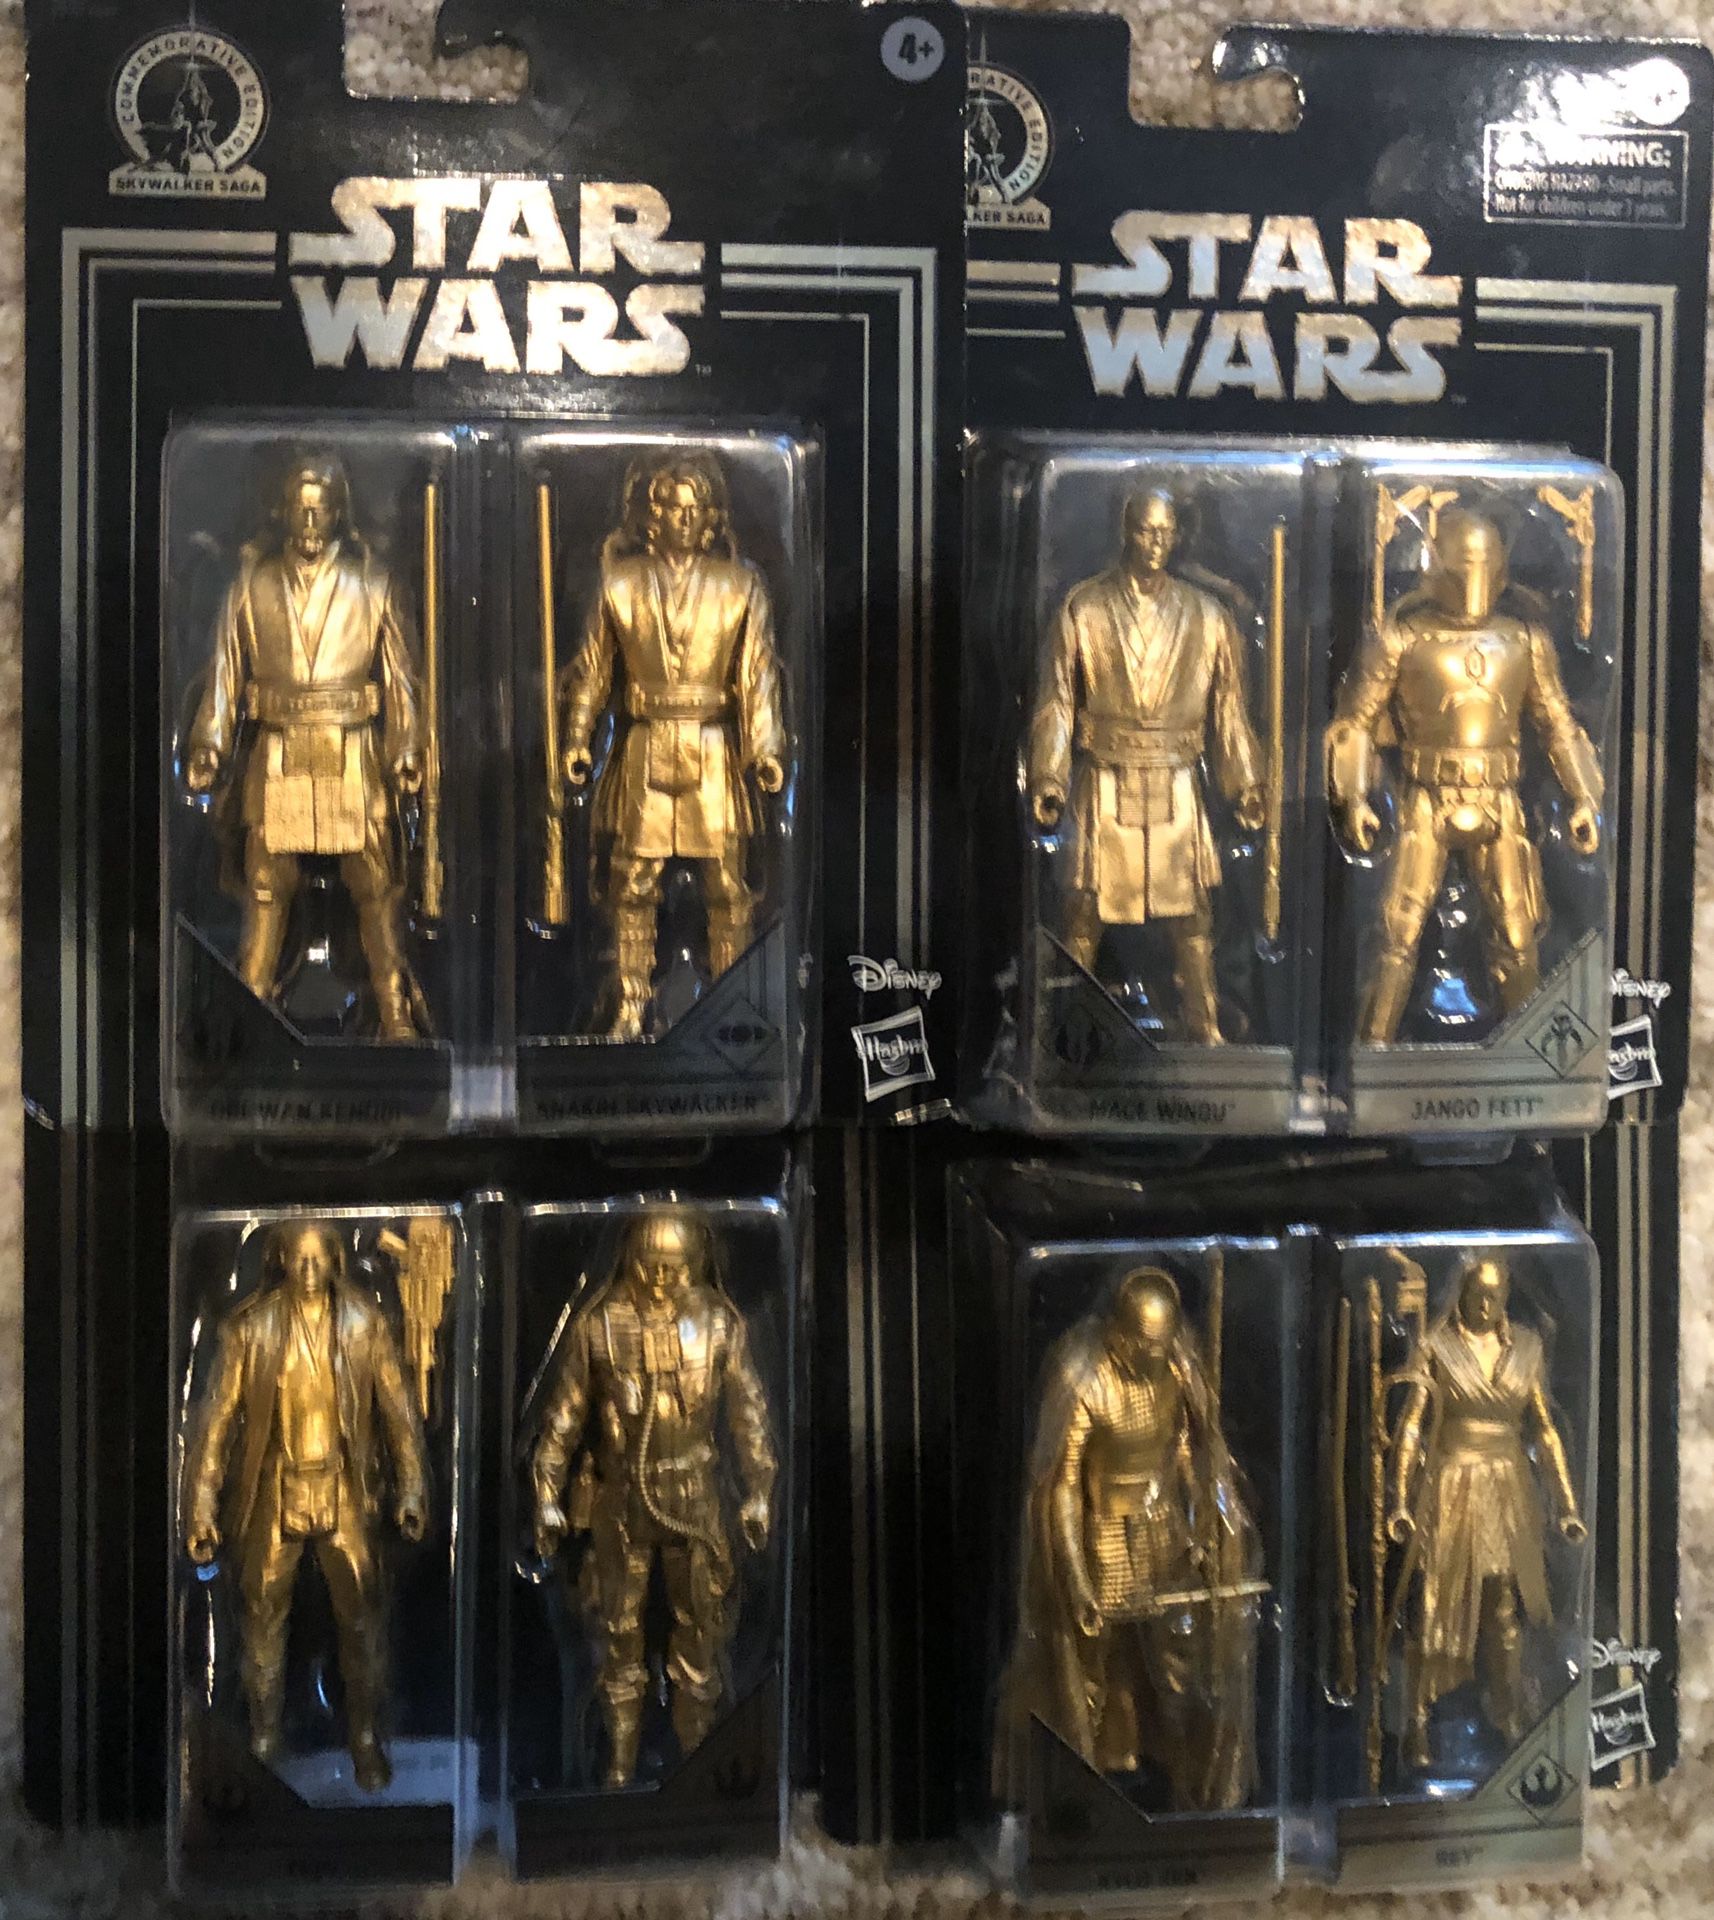 Star Wars Commemorative Edition 4 Packs total